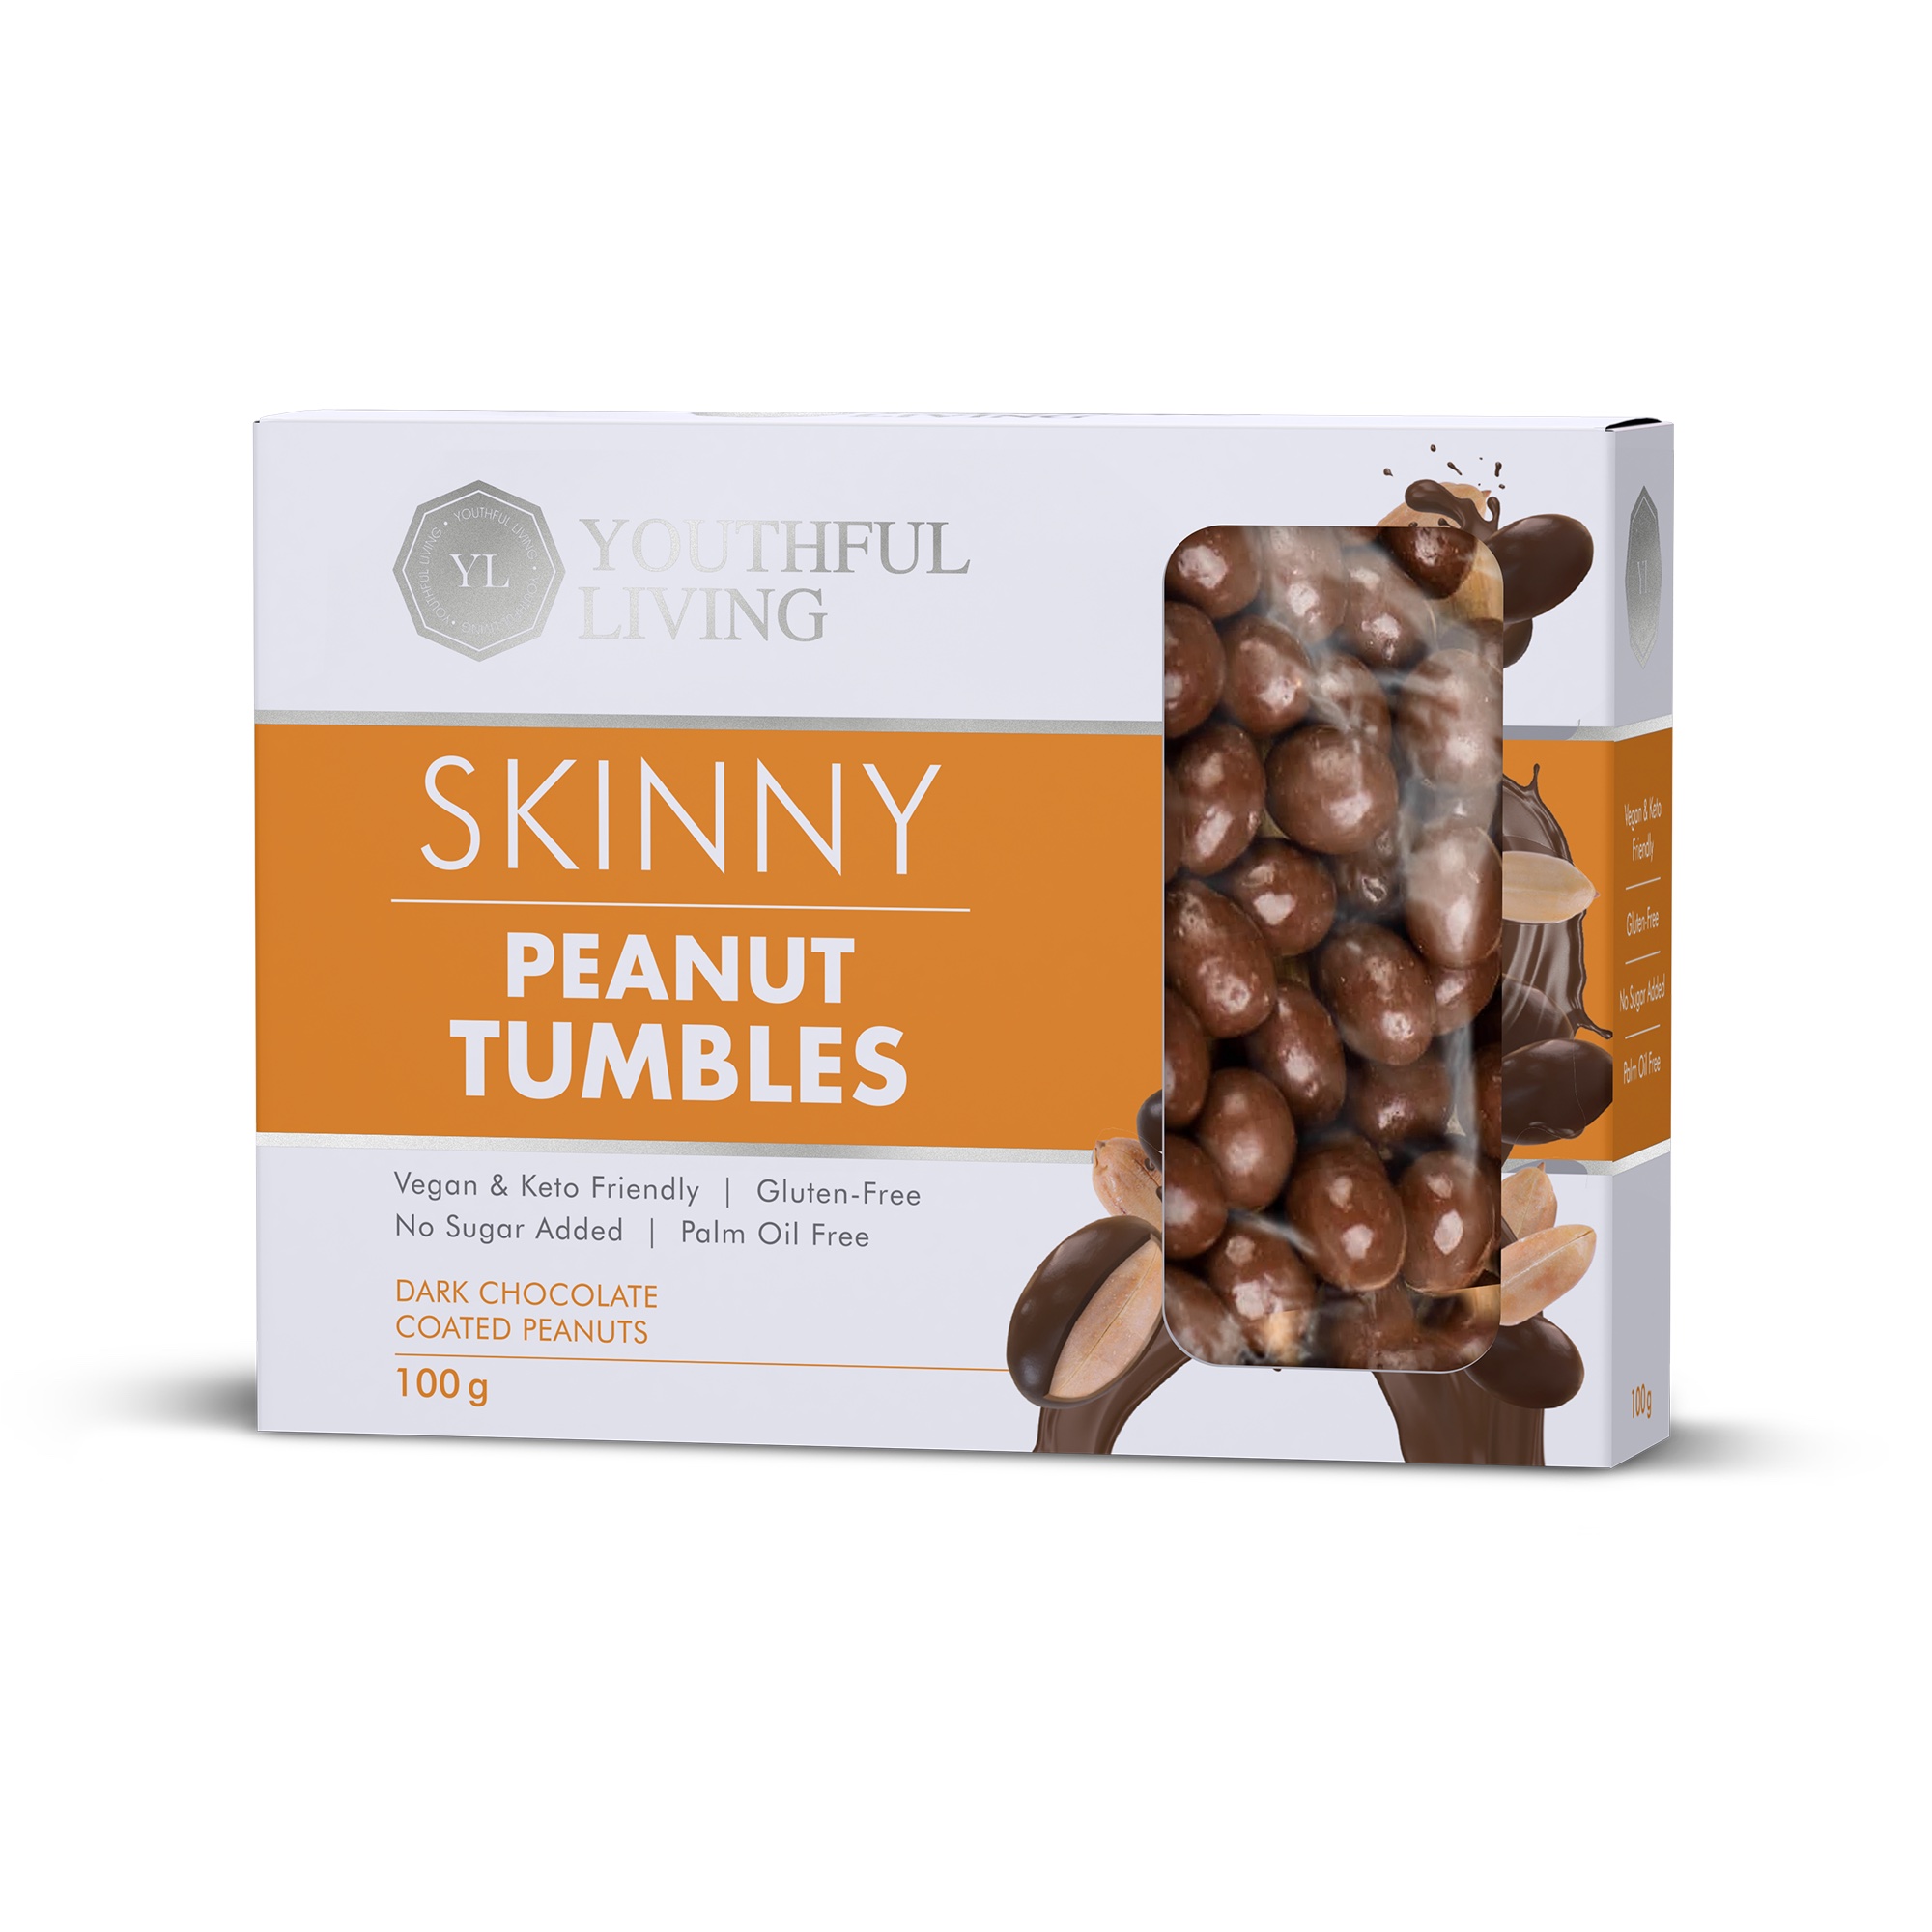 YL Skinny Peanut Tumbles